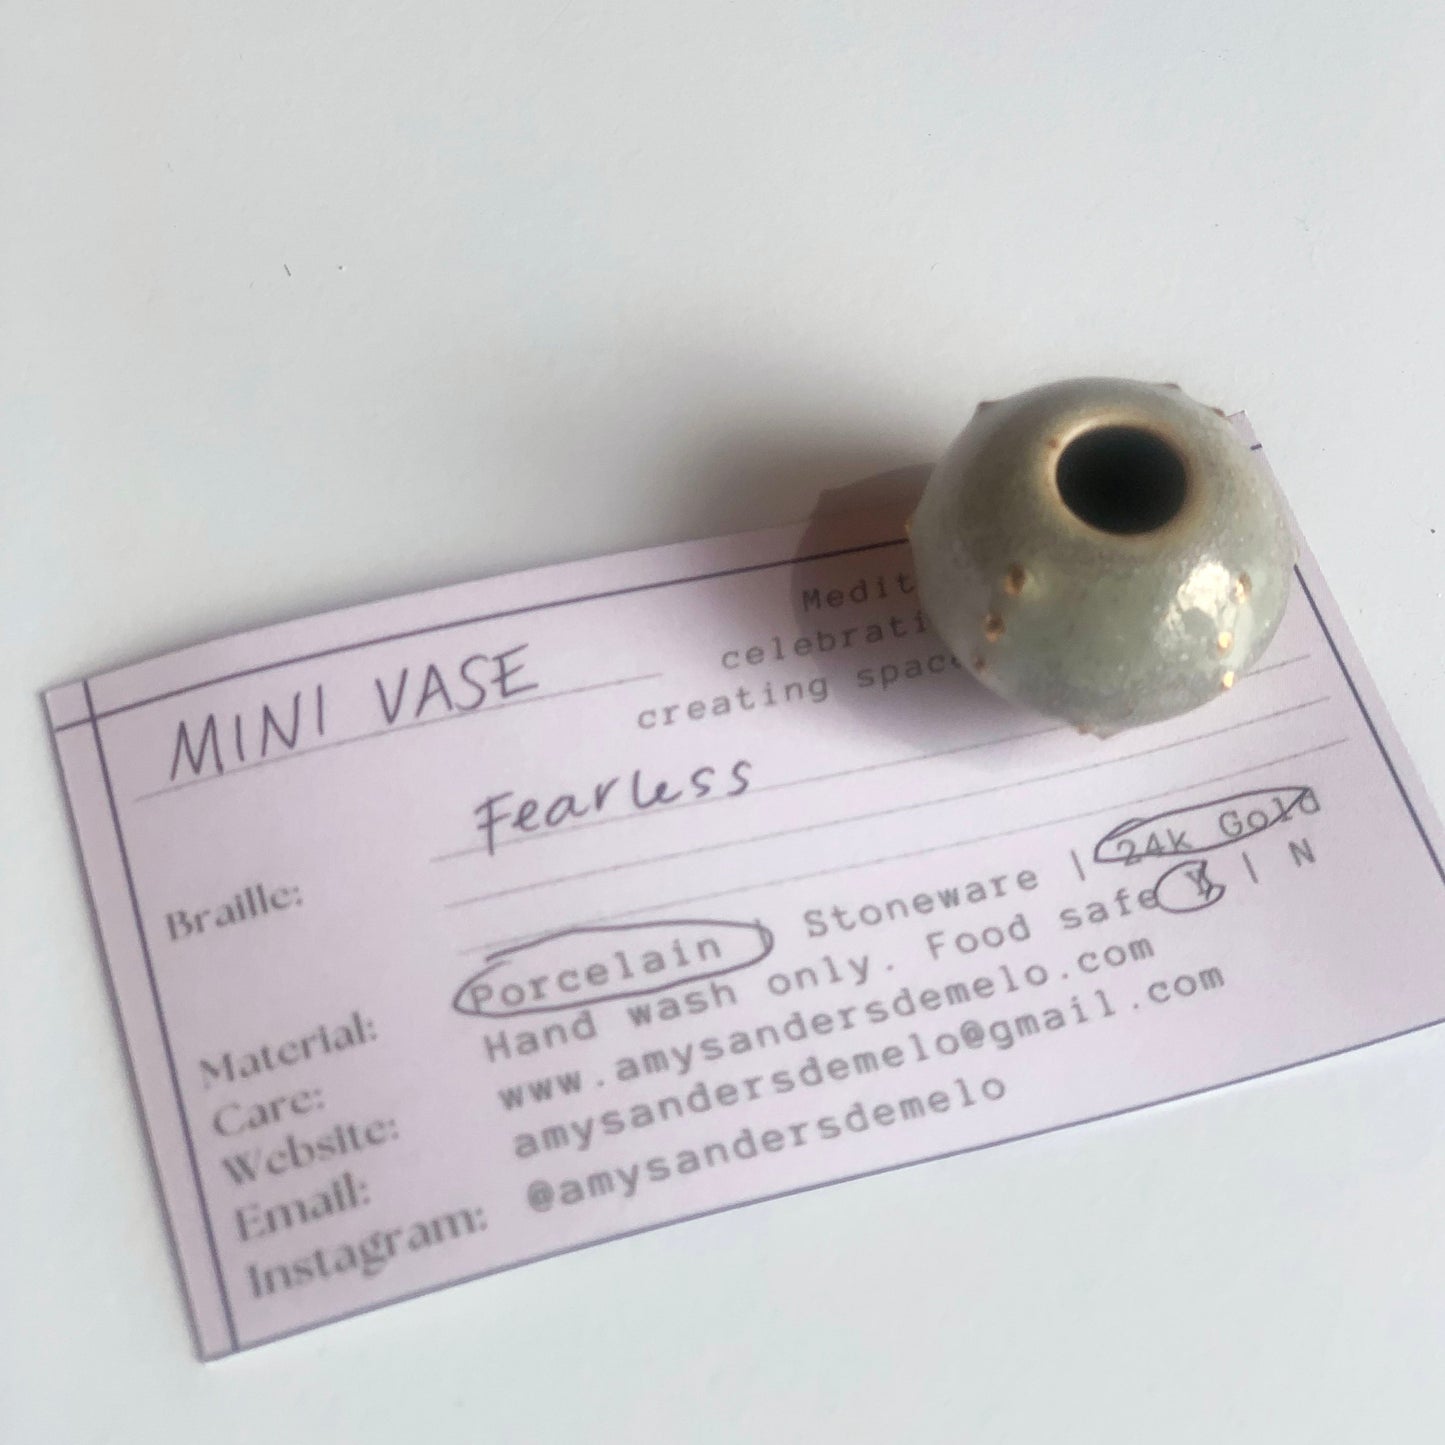 Miniature Meditation Vase "Fearless" | Amy Sanders de Melo